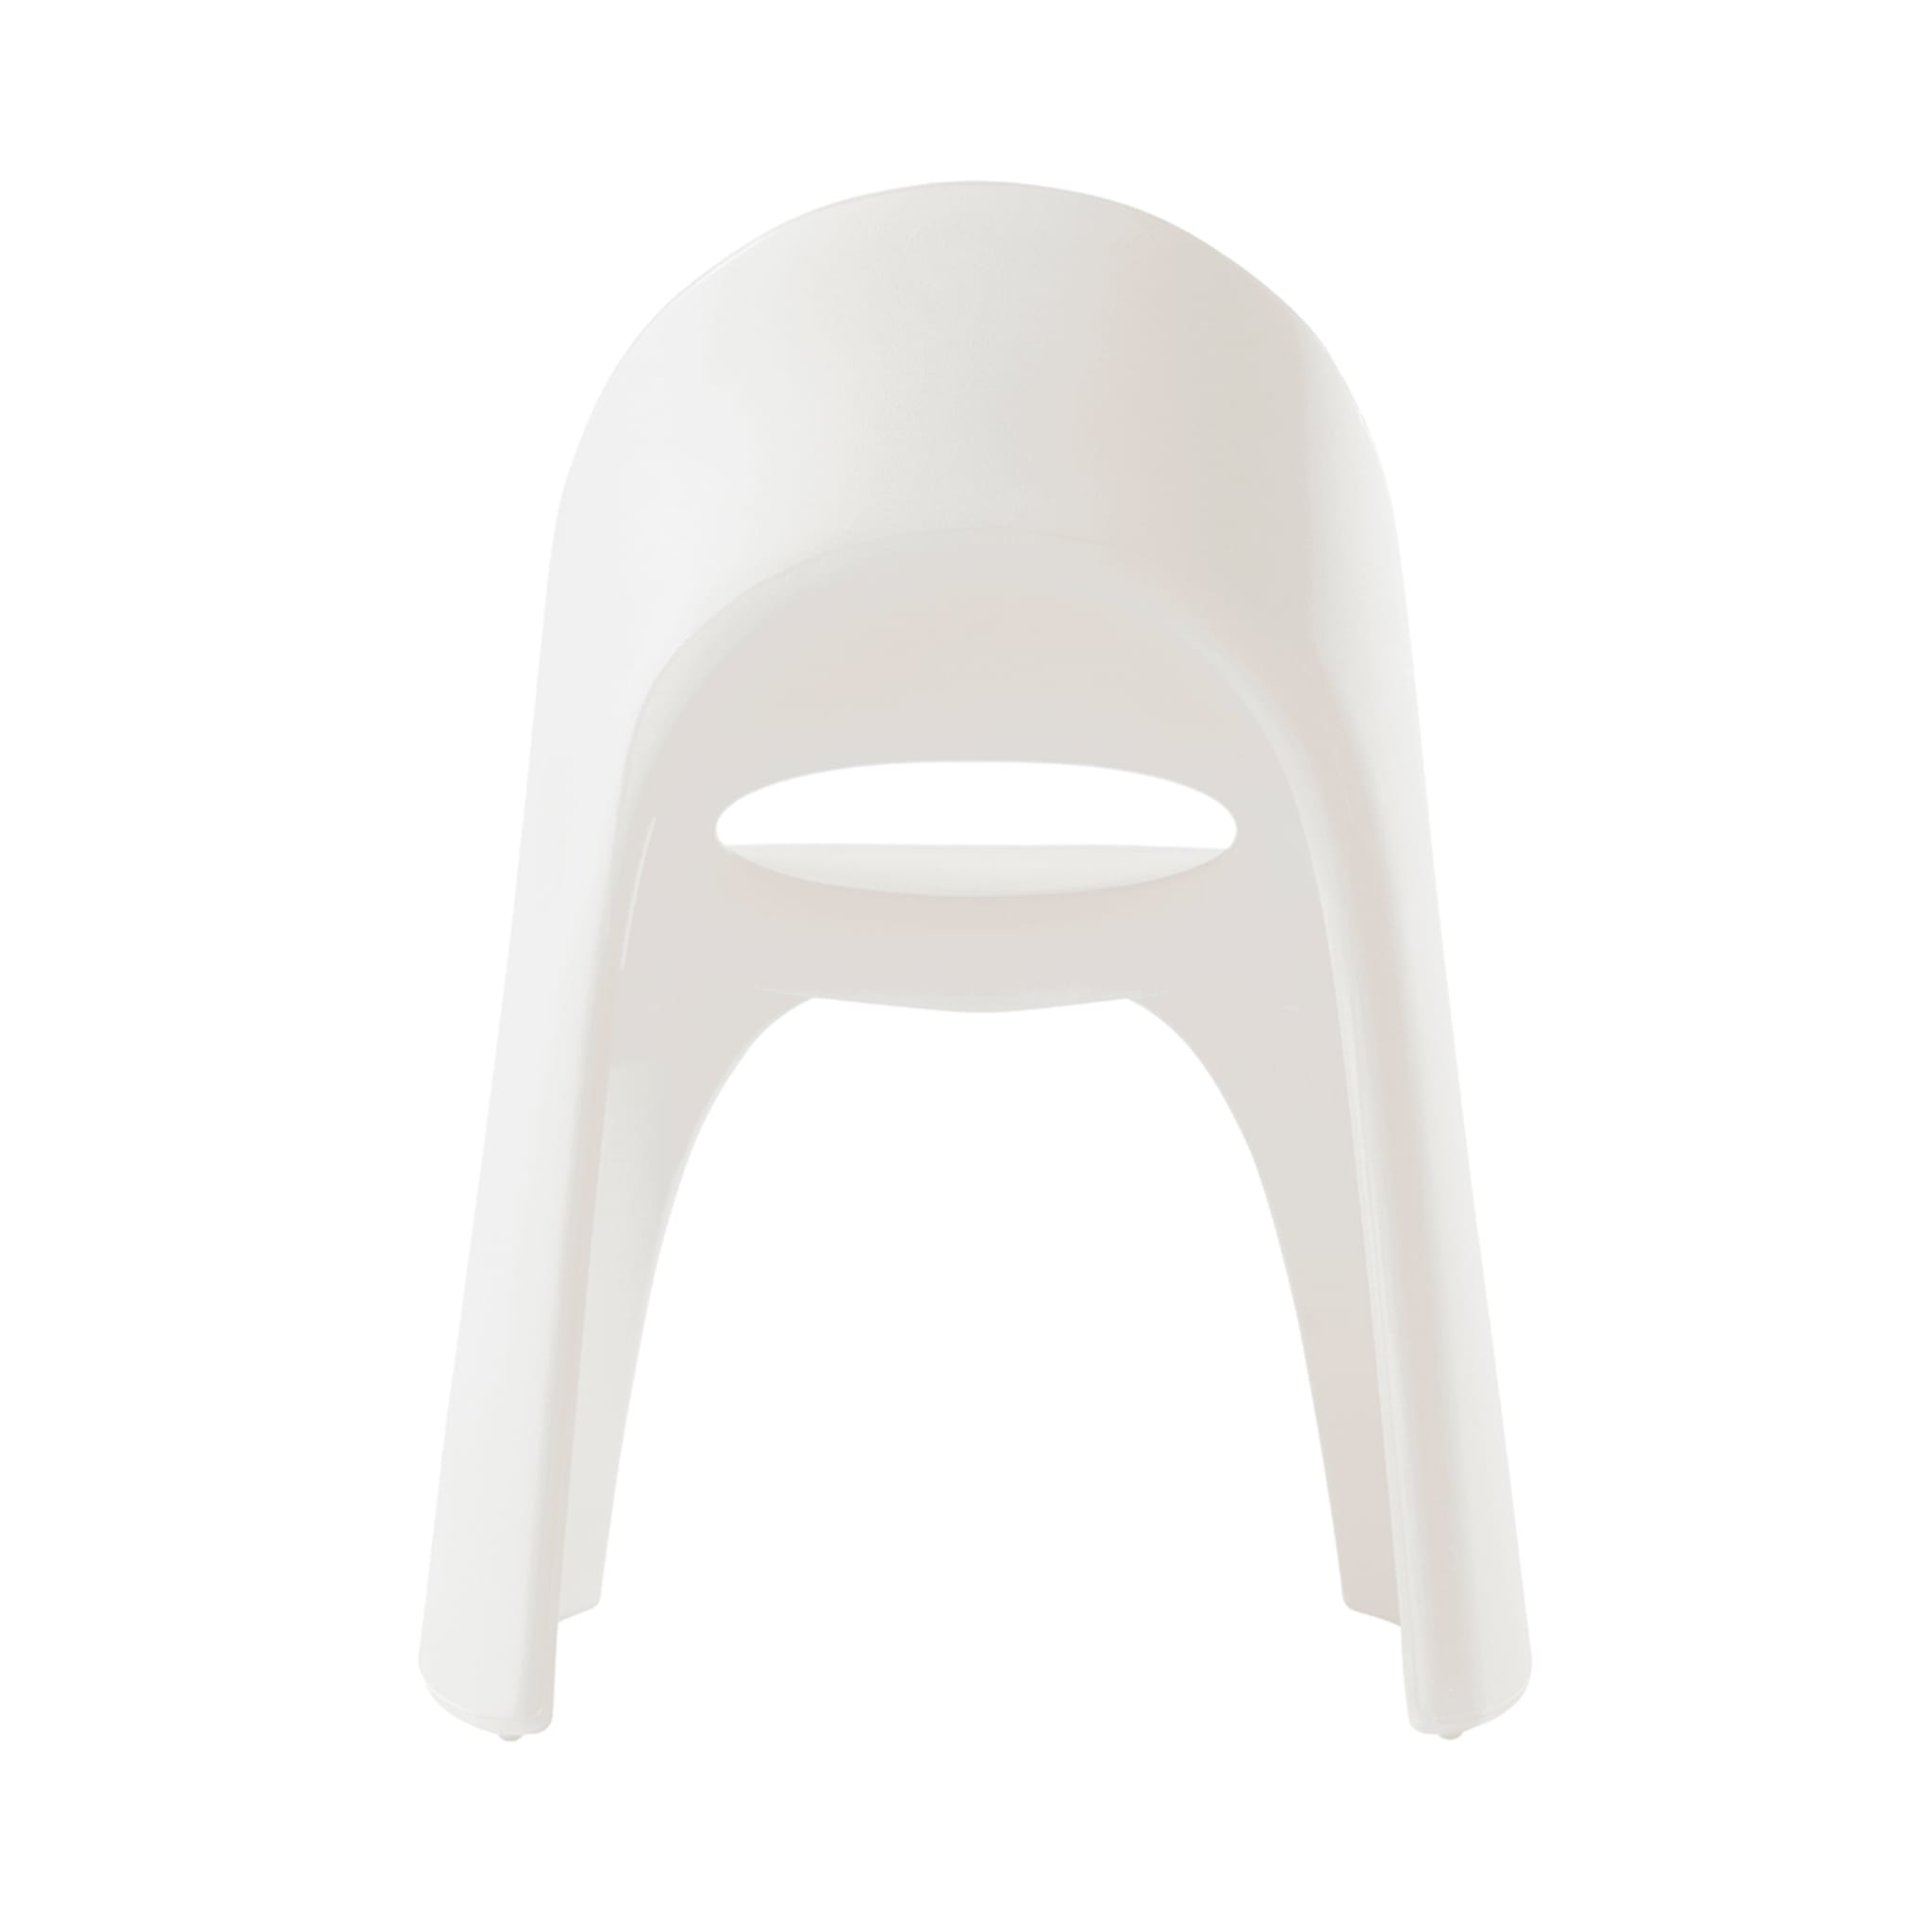 Amelie White Chair - Alternative view 1